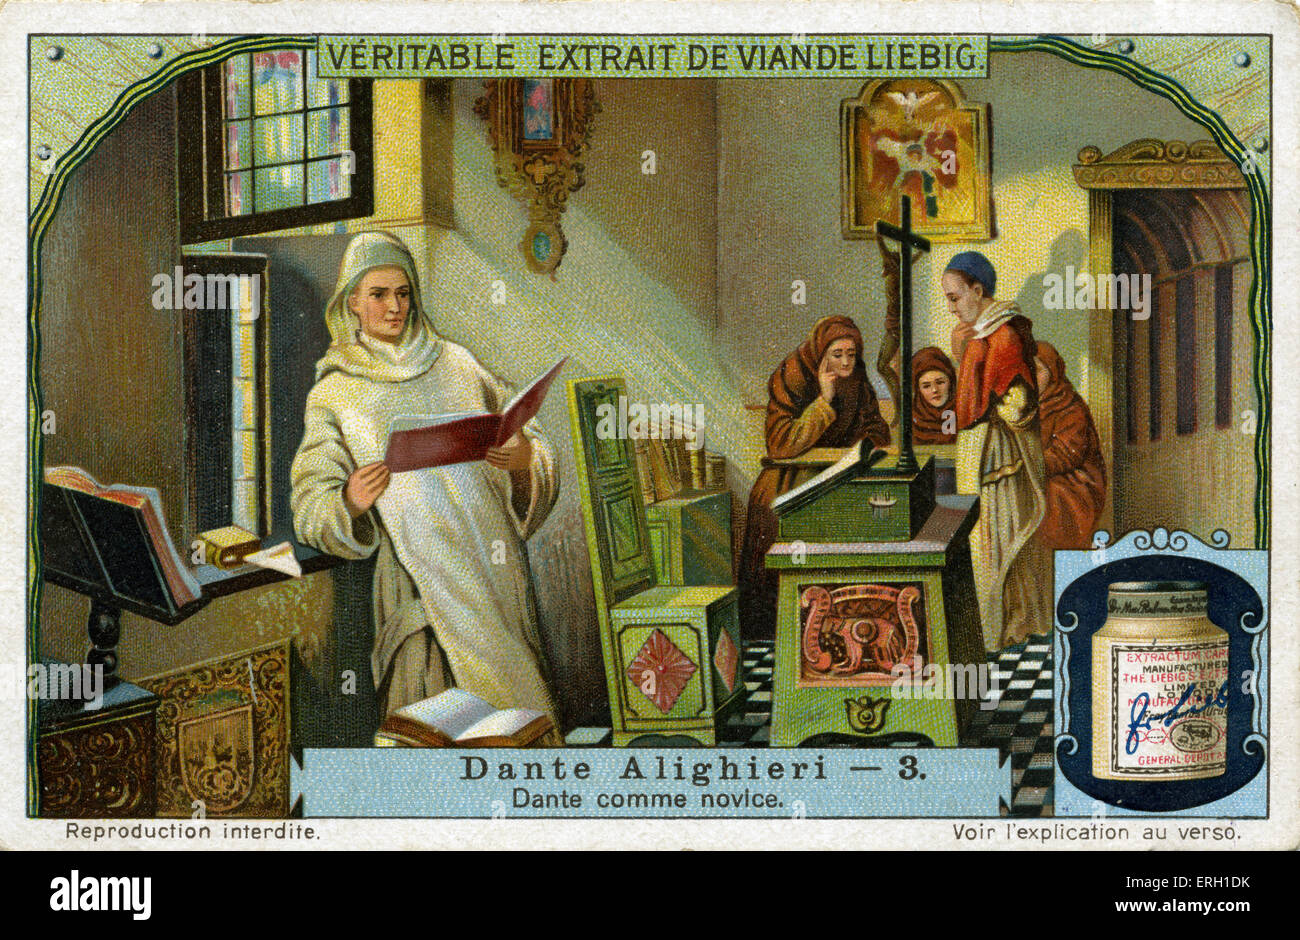 Dante Alighieri comme un moine novice ( carte Liebig annonce - Dante Alighieri 3) auteur italien, mi-mai à mi-juin 1265 - Banque D'Images